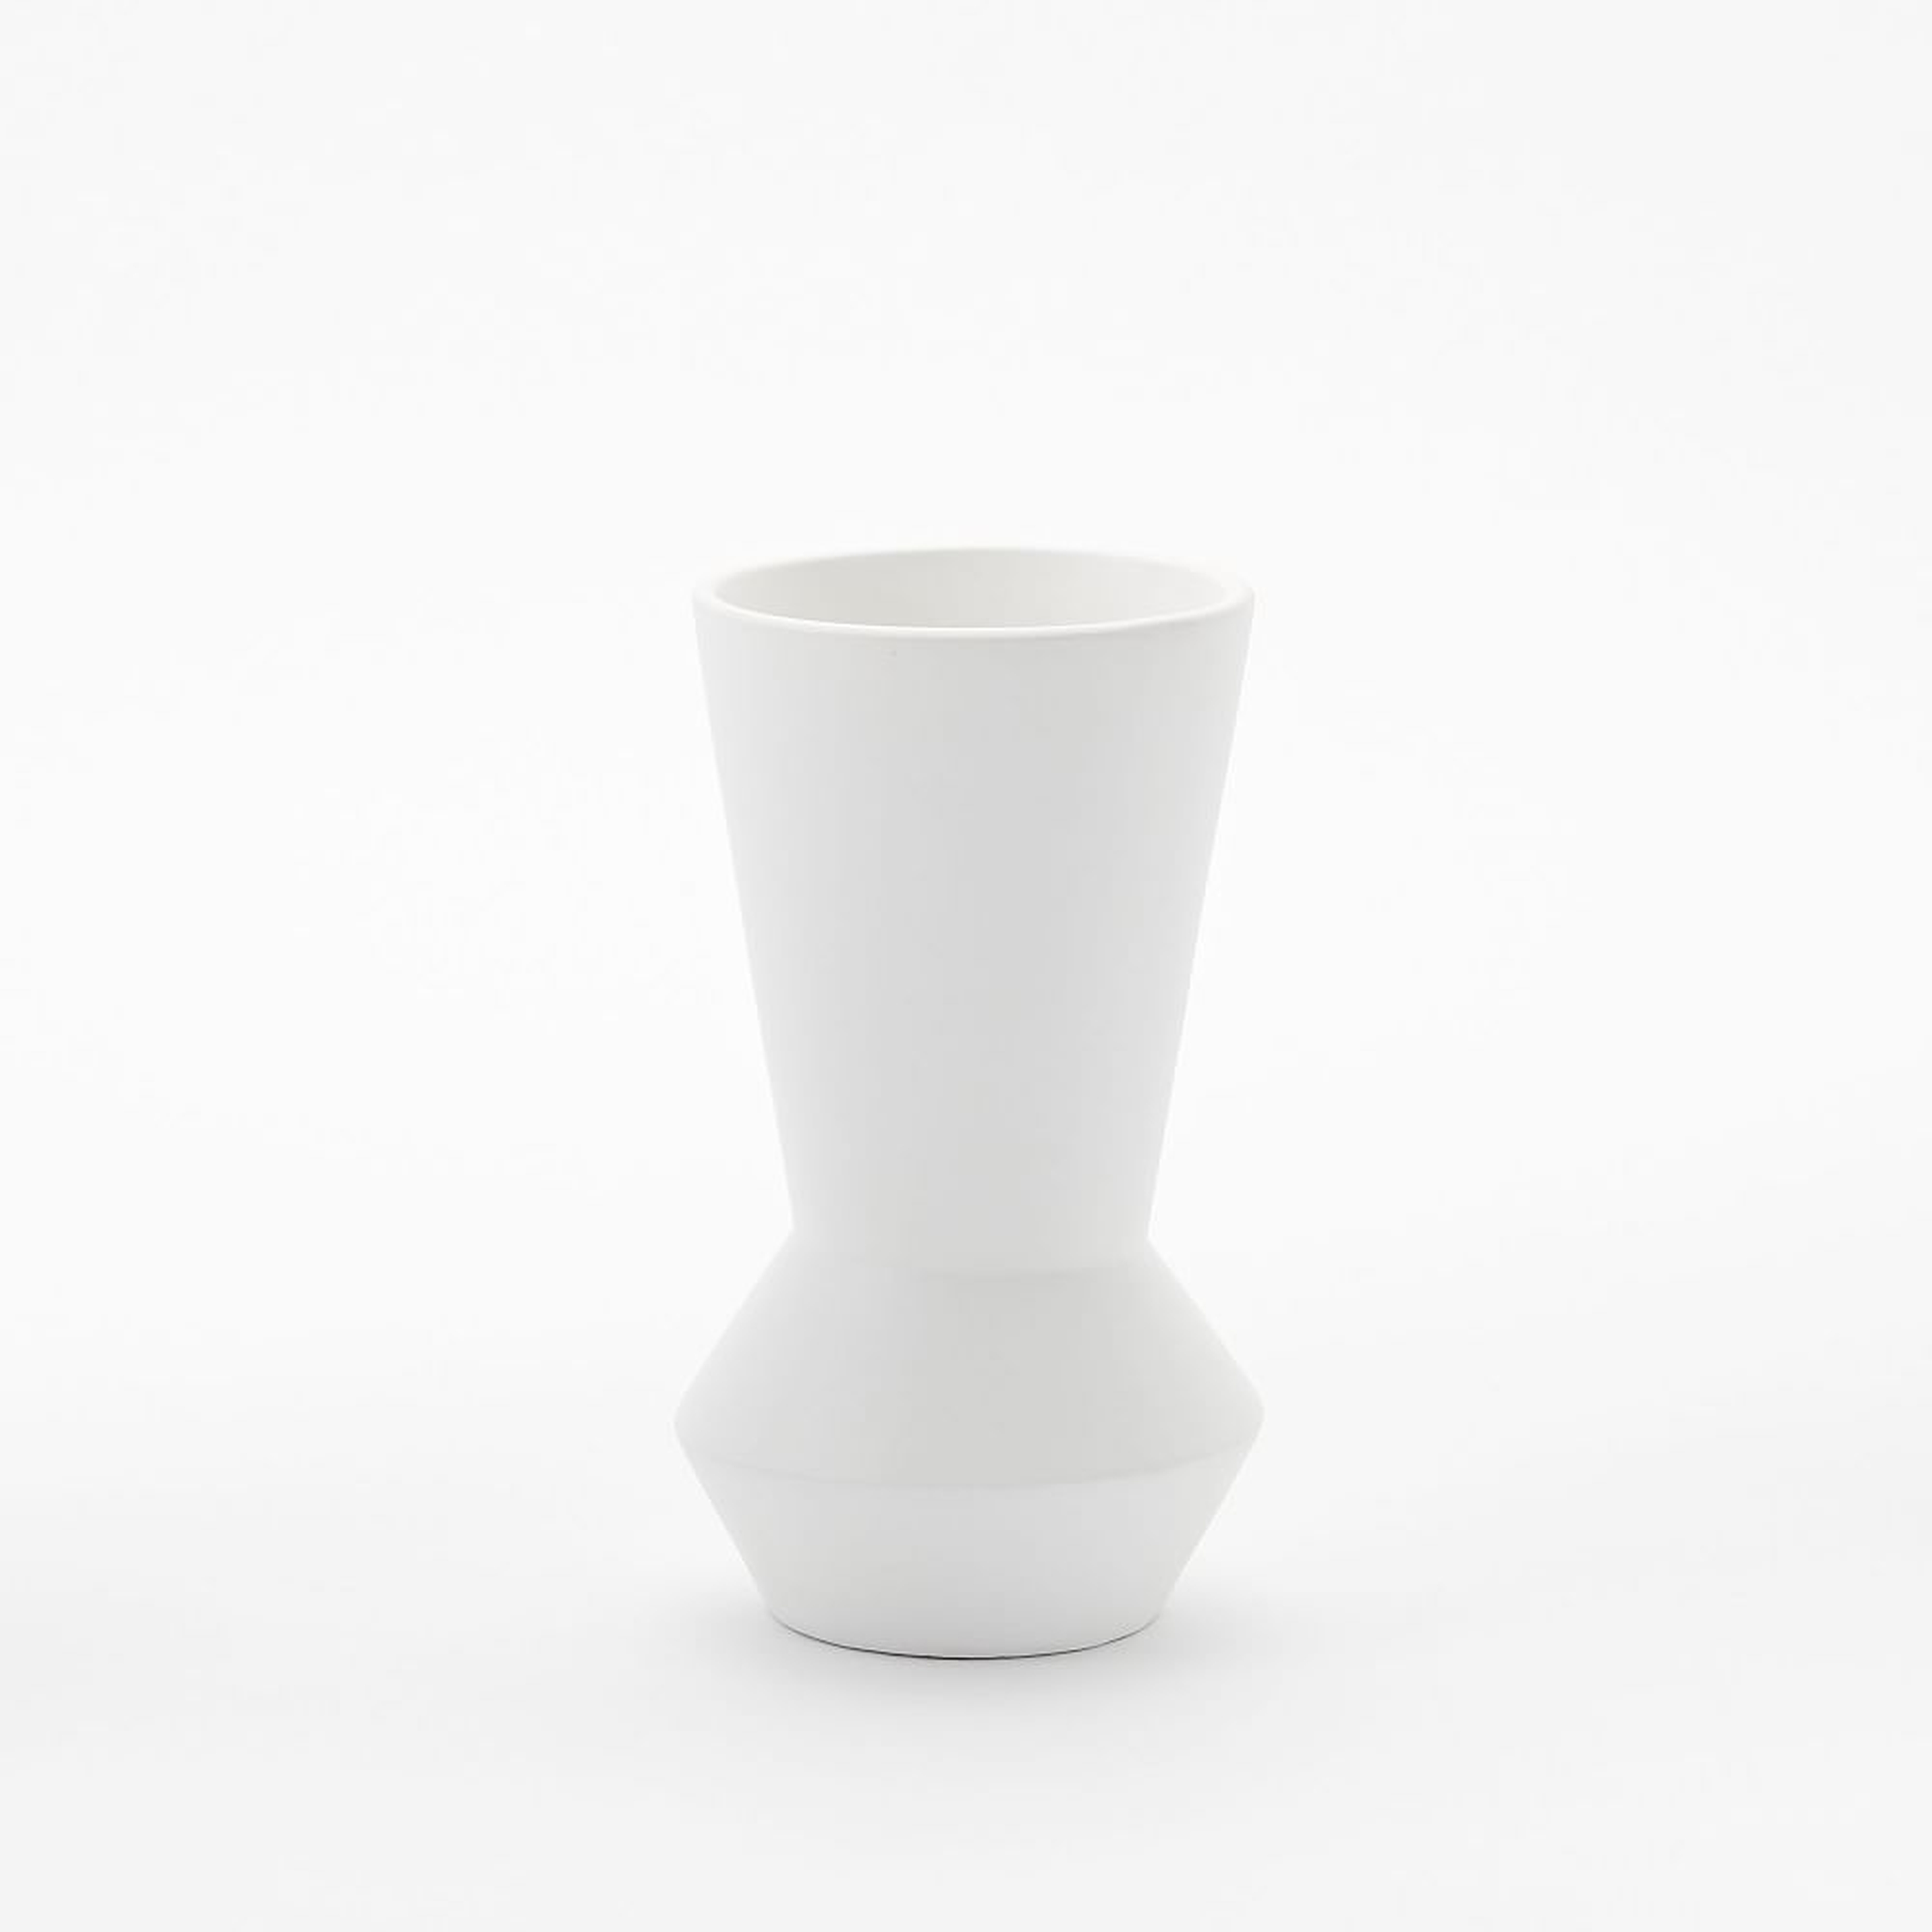 Totem Vase, 8", White - West Elm